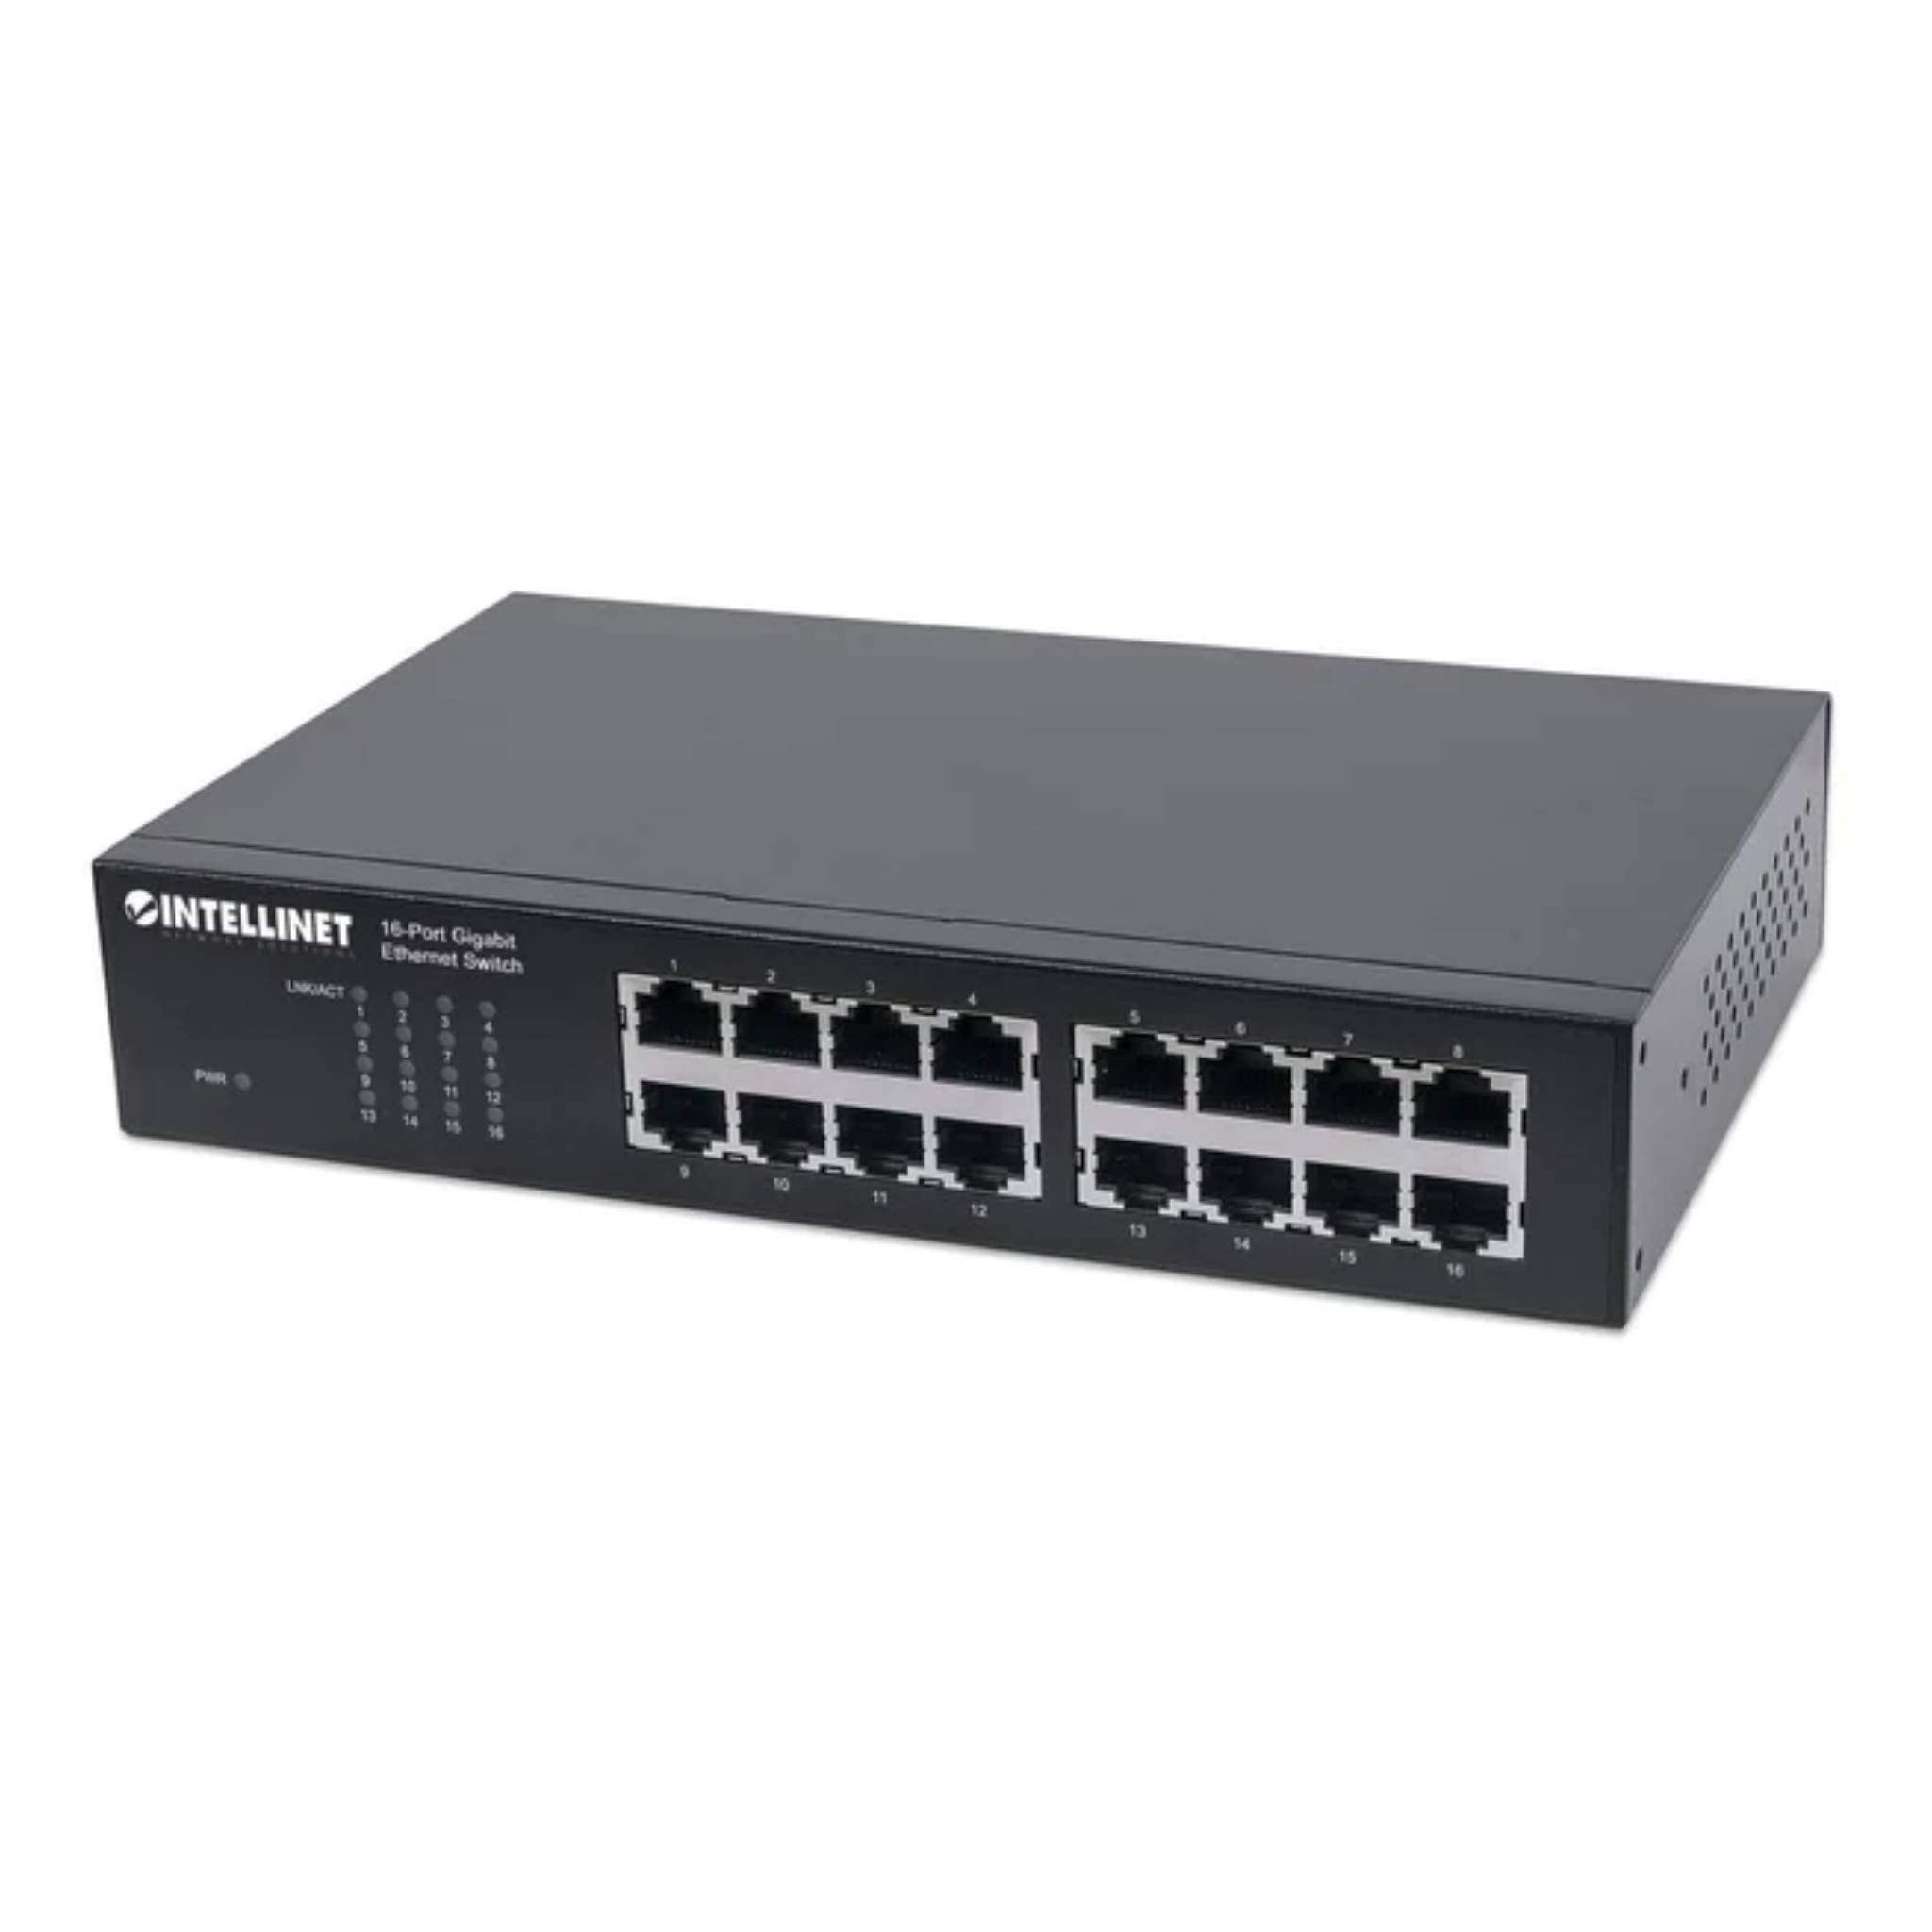 Intellinet 16-Port Gigabit Ethernet Switch